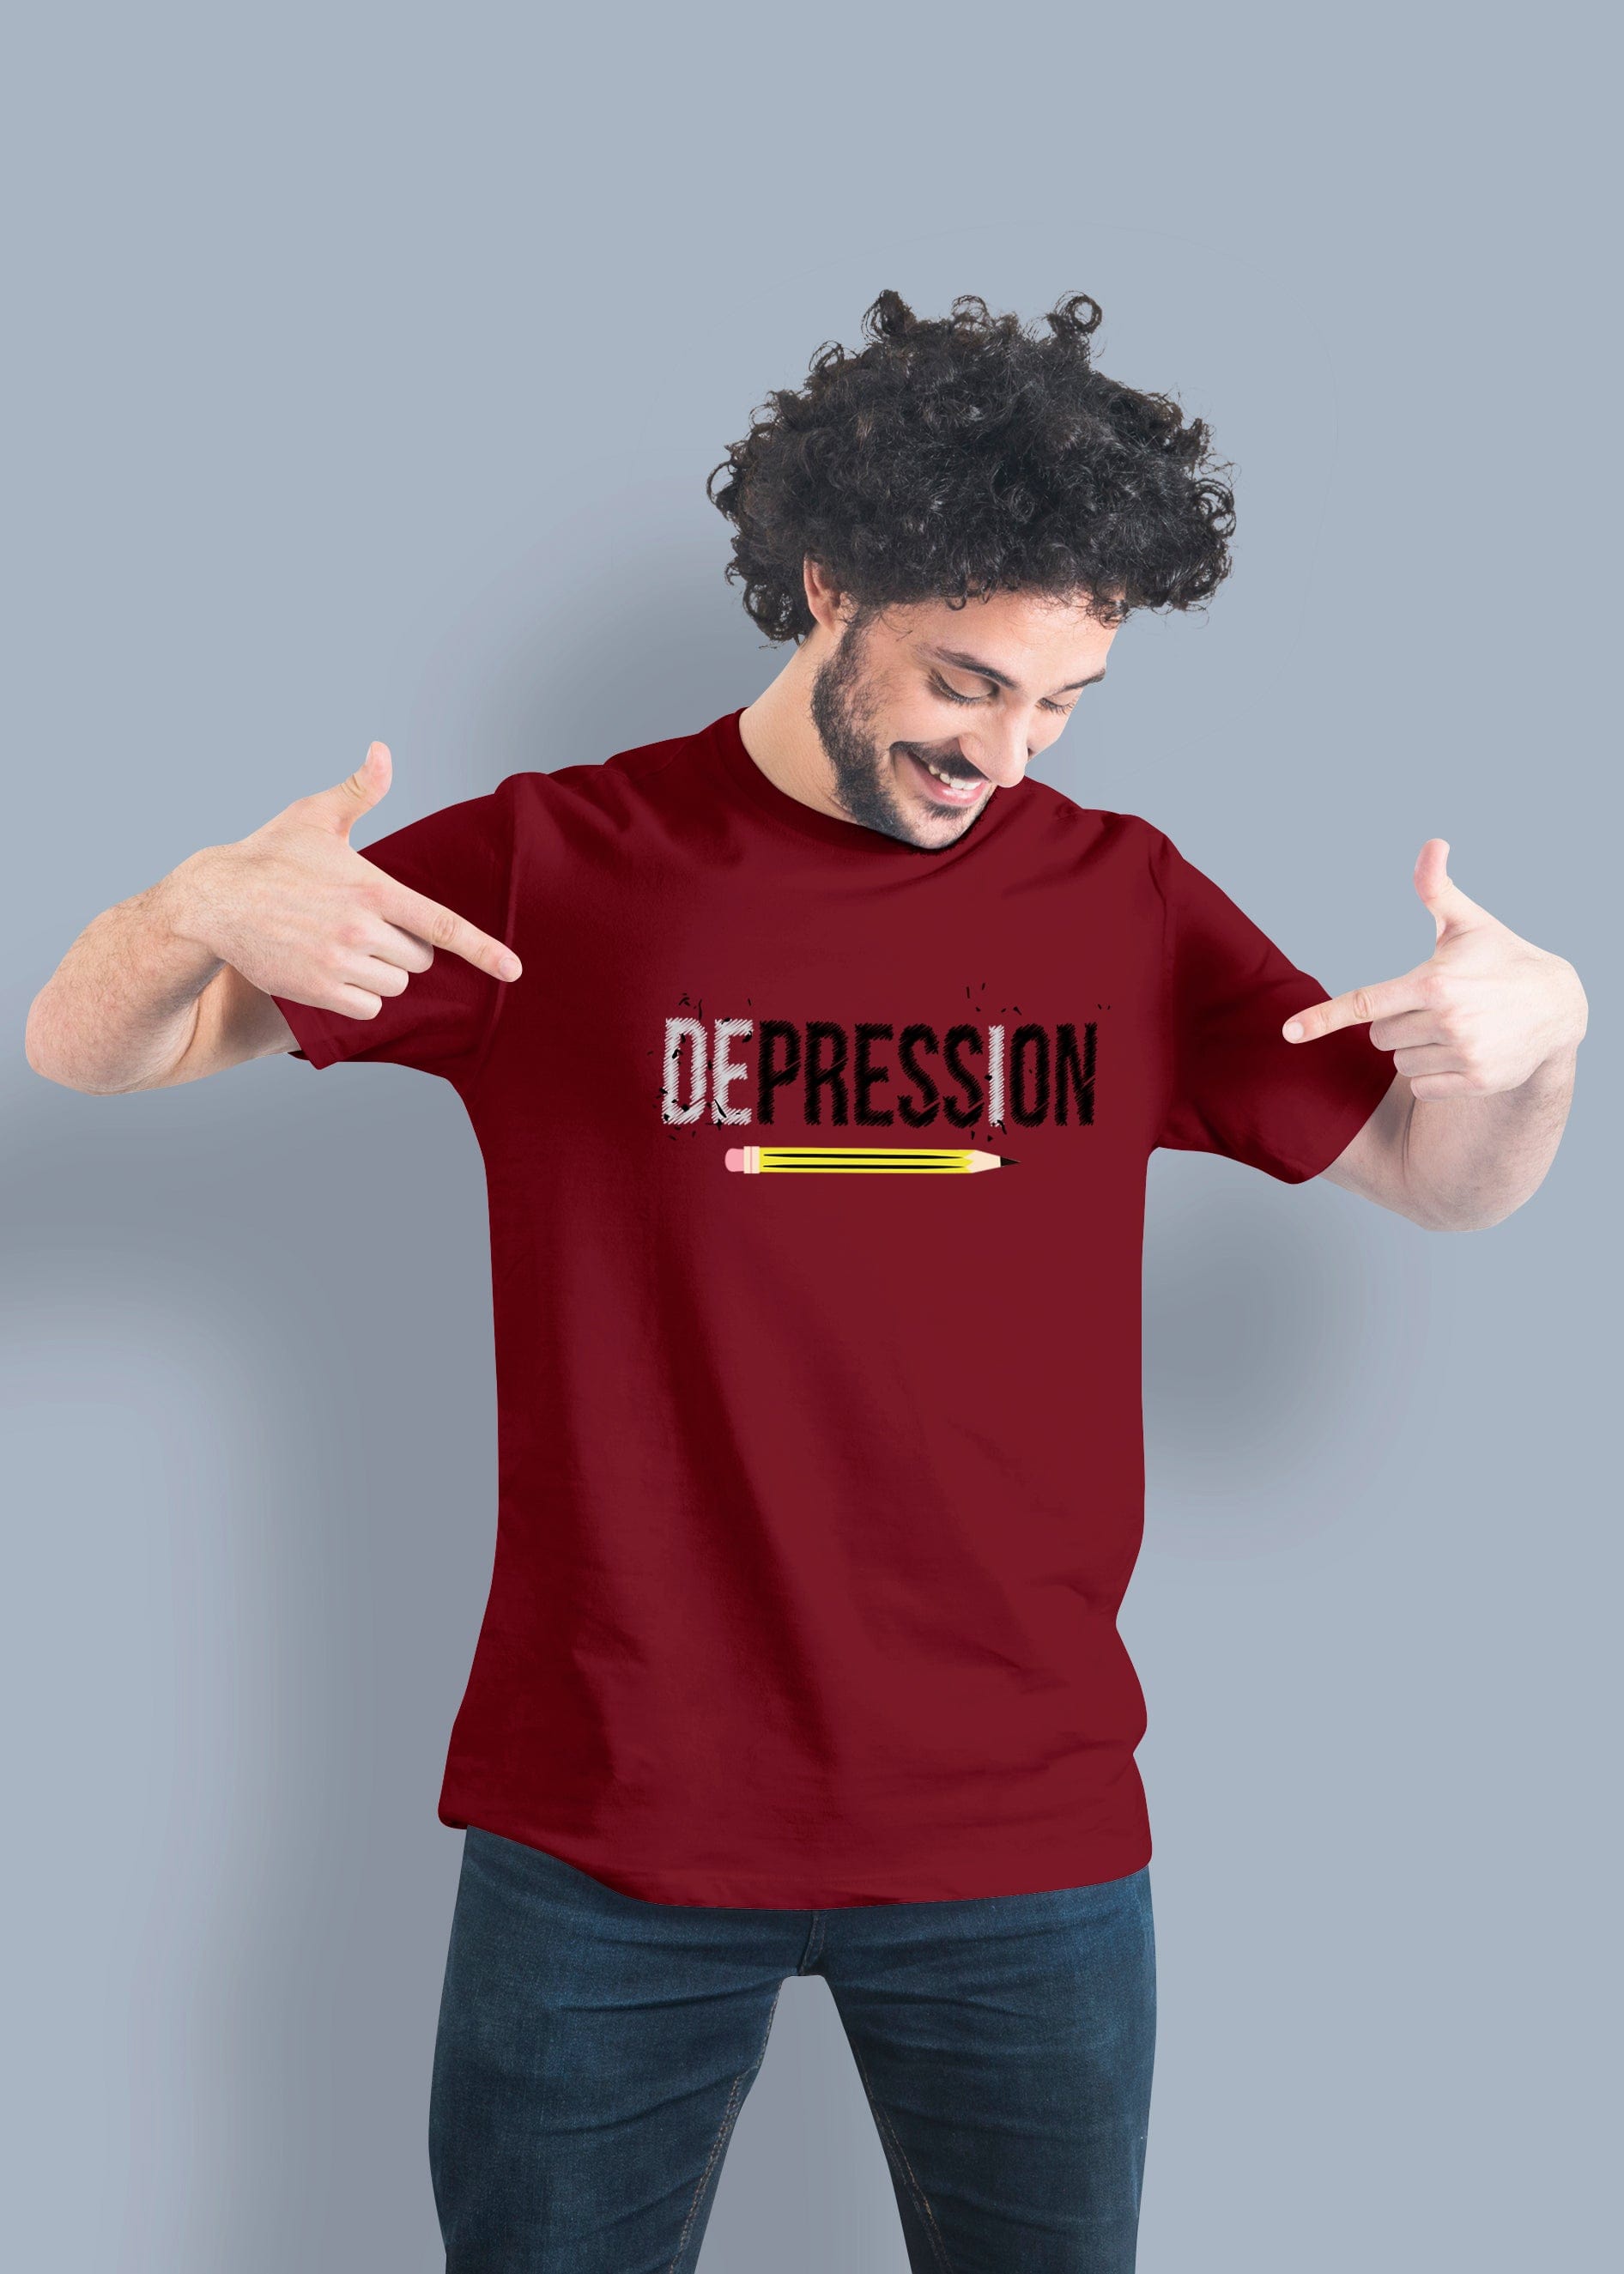 Depression Printed Half Sleeve Premium Cotton T-shirt For Men